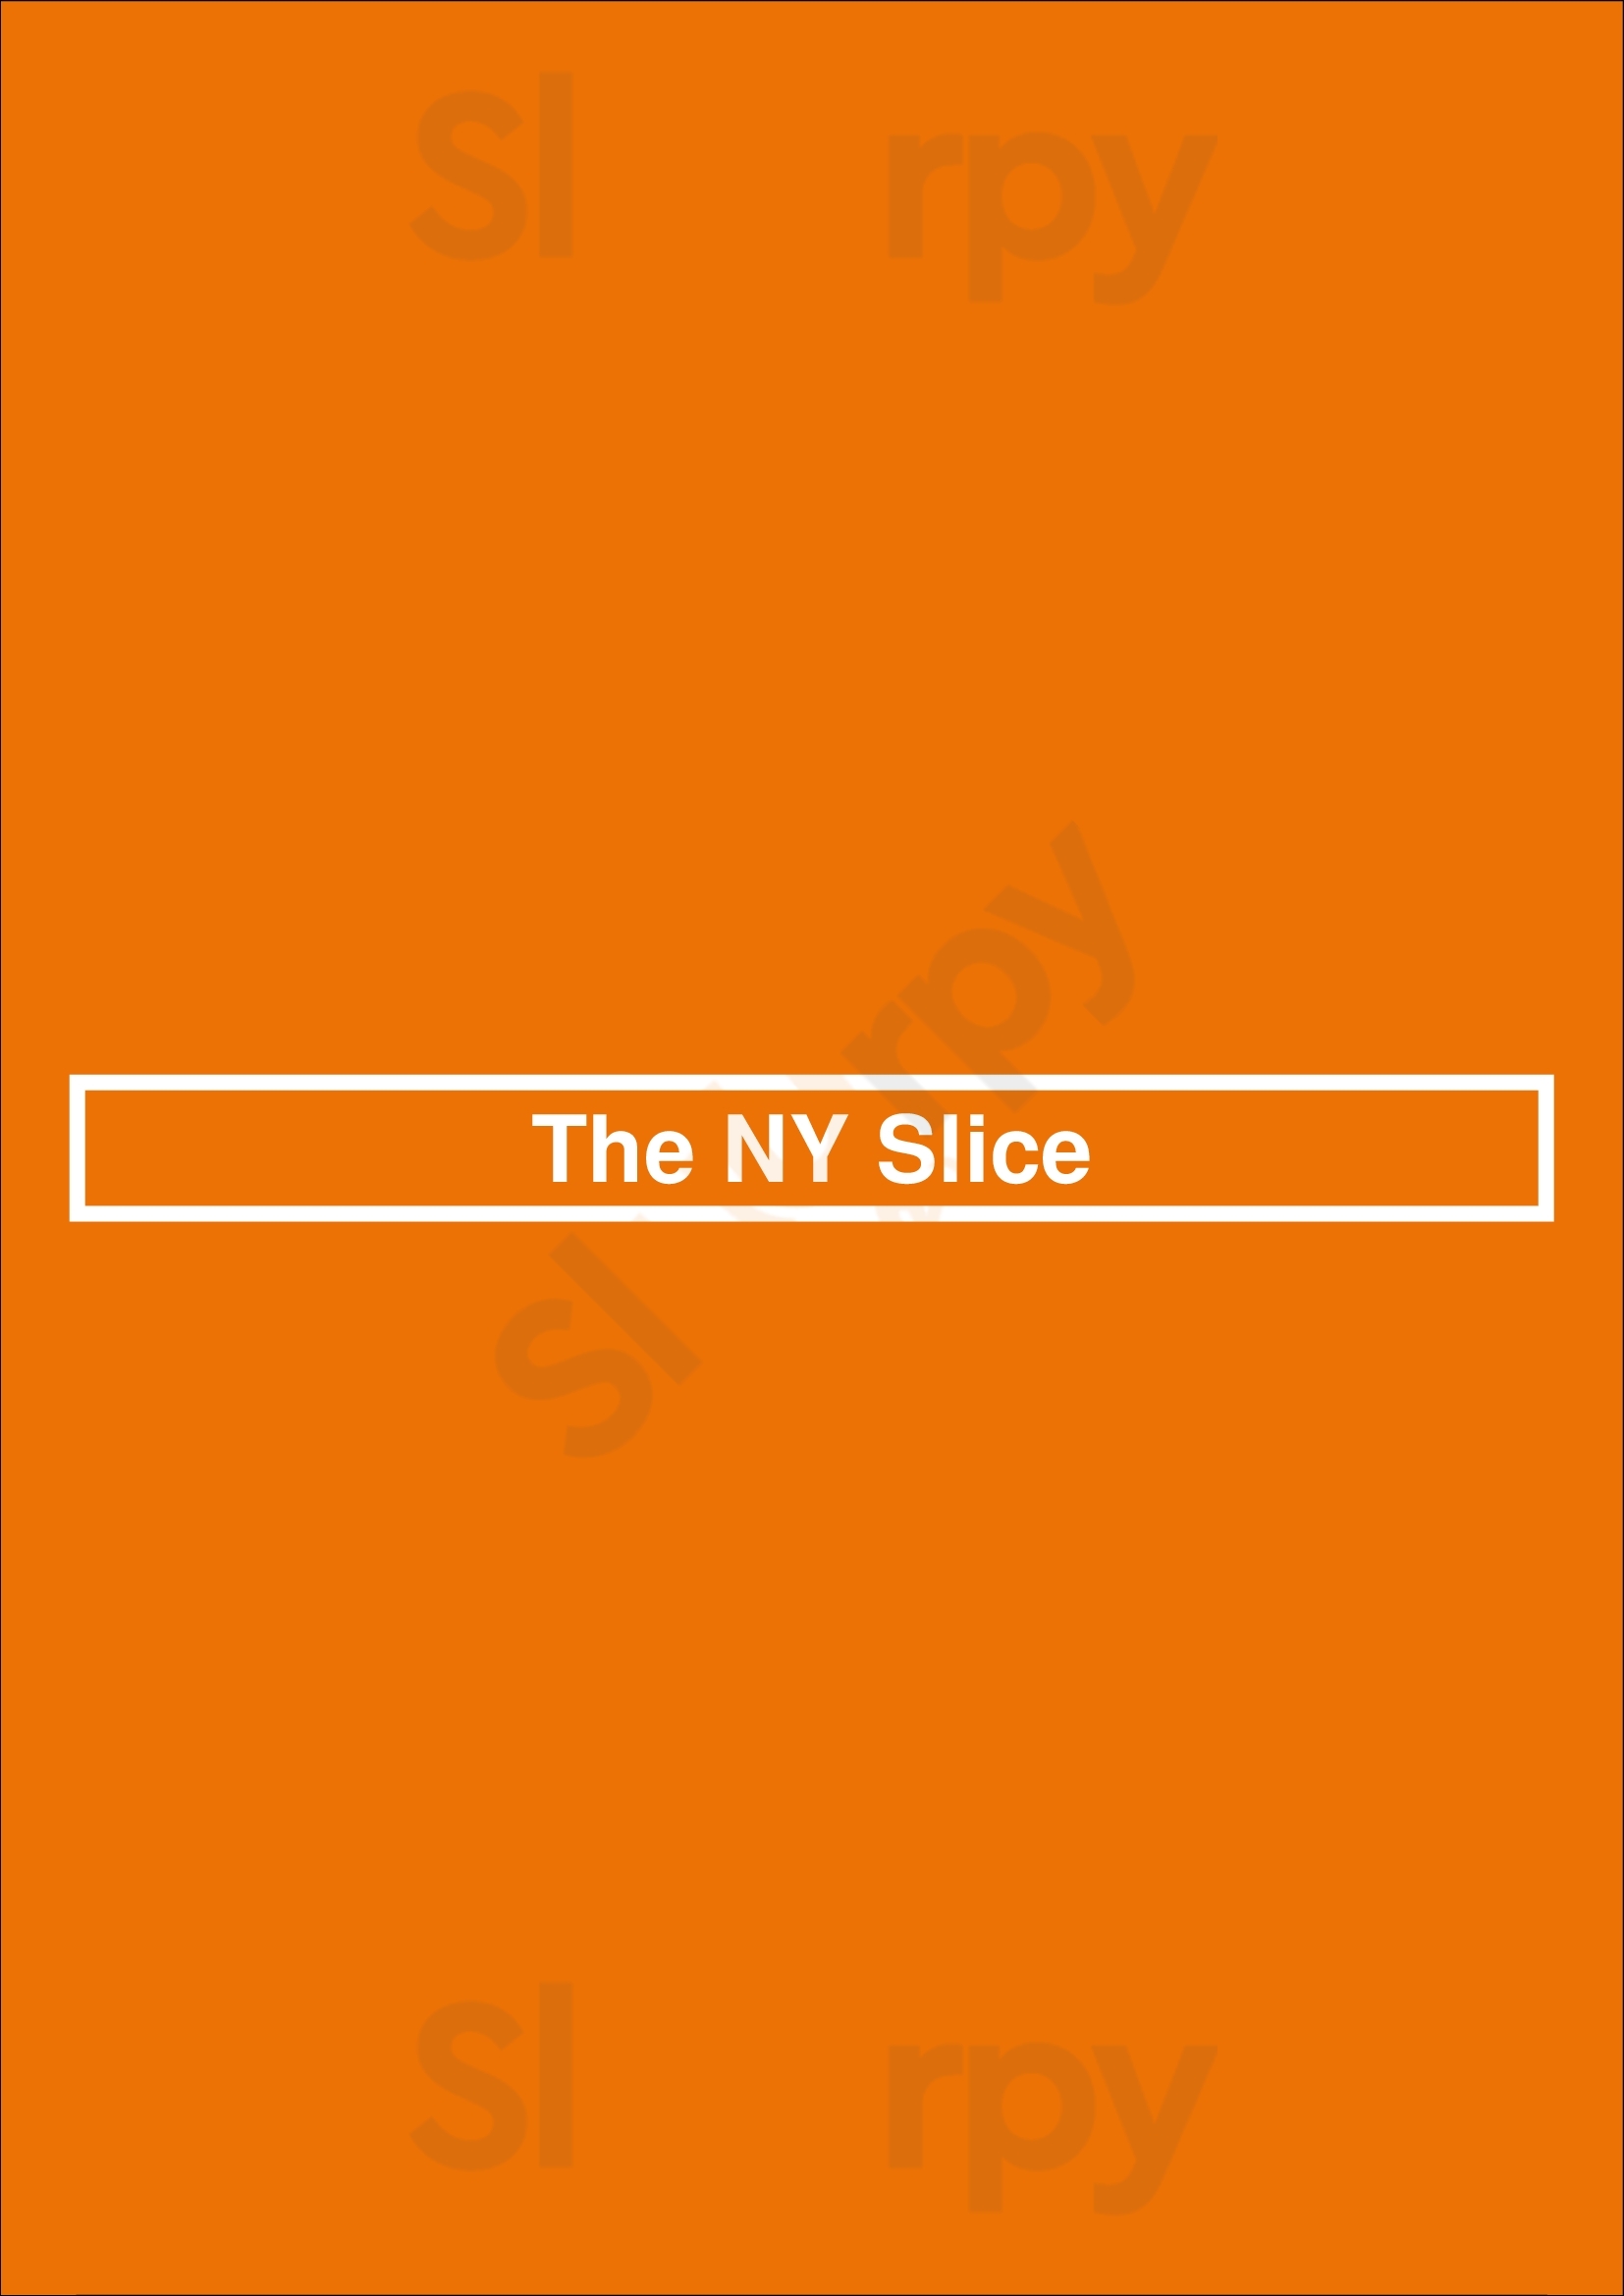 The Ny Slice Indianapolis Menu - 1